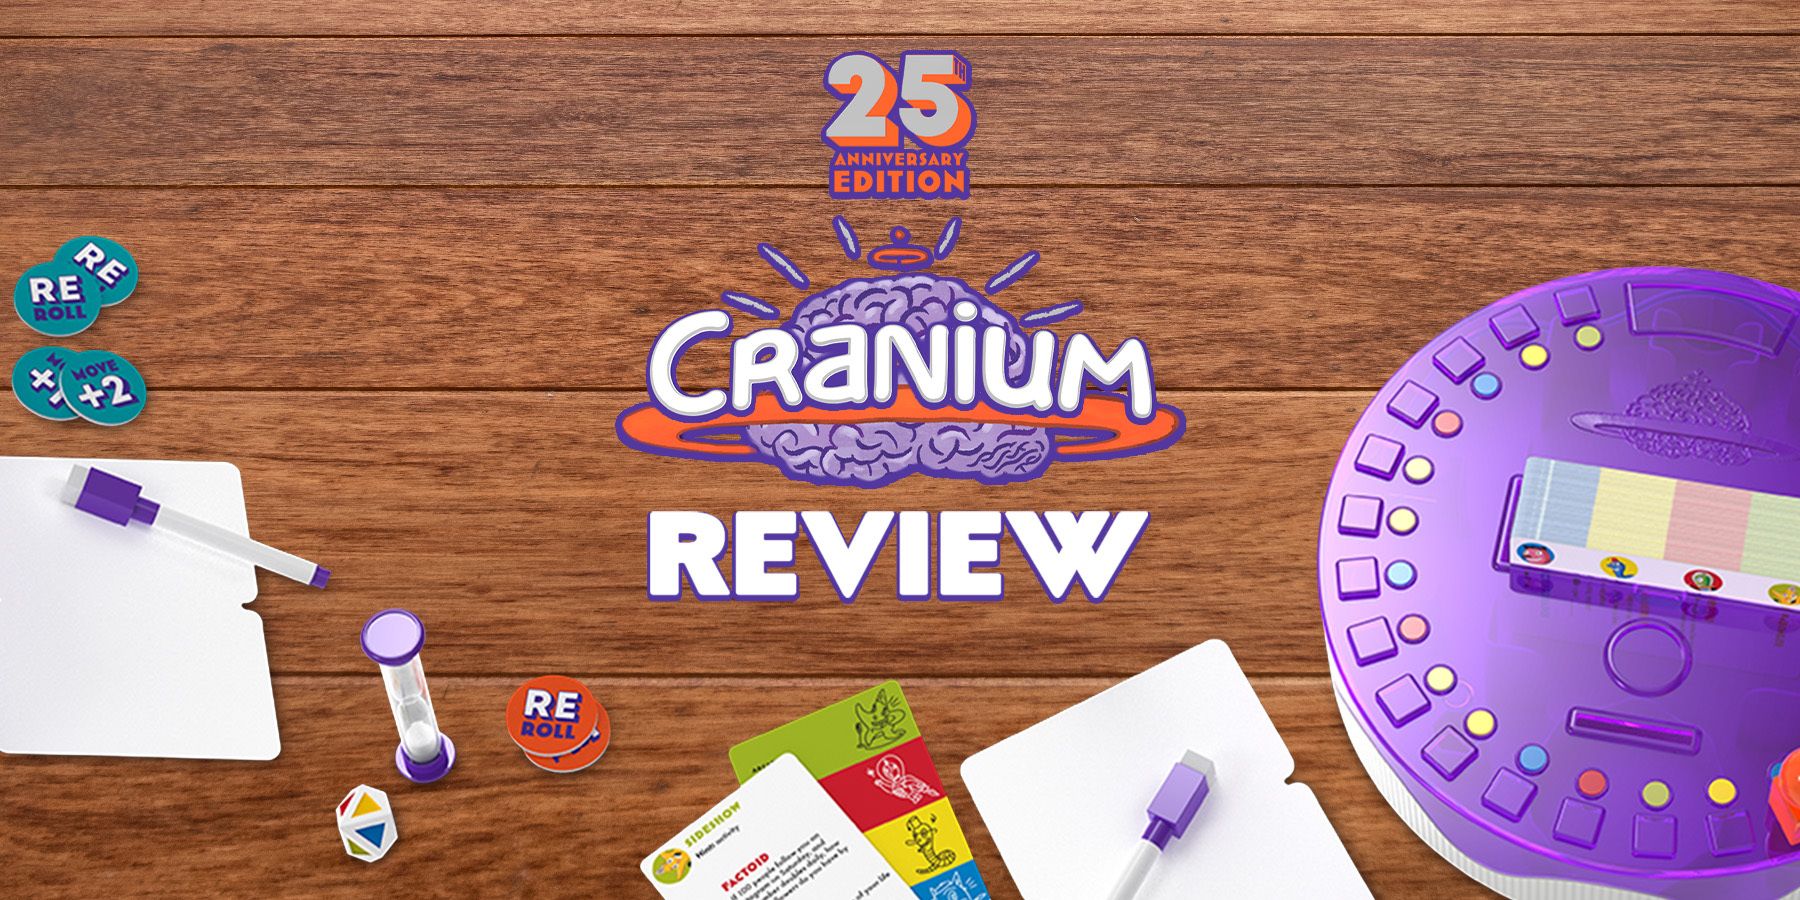 Buy Cranium 25th Anniversary Edition Game at Funko.